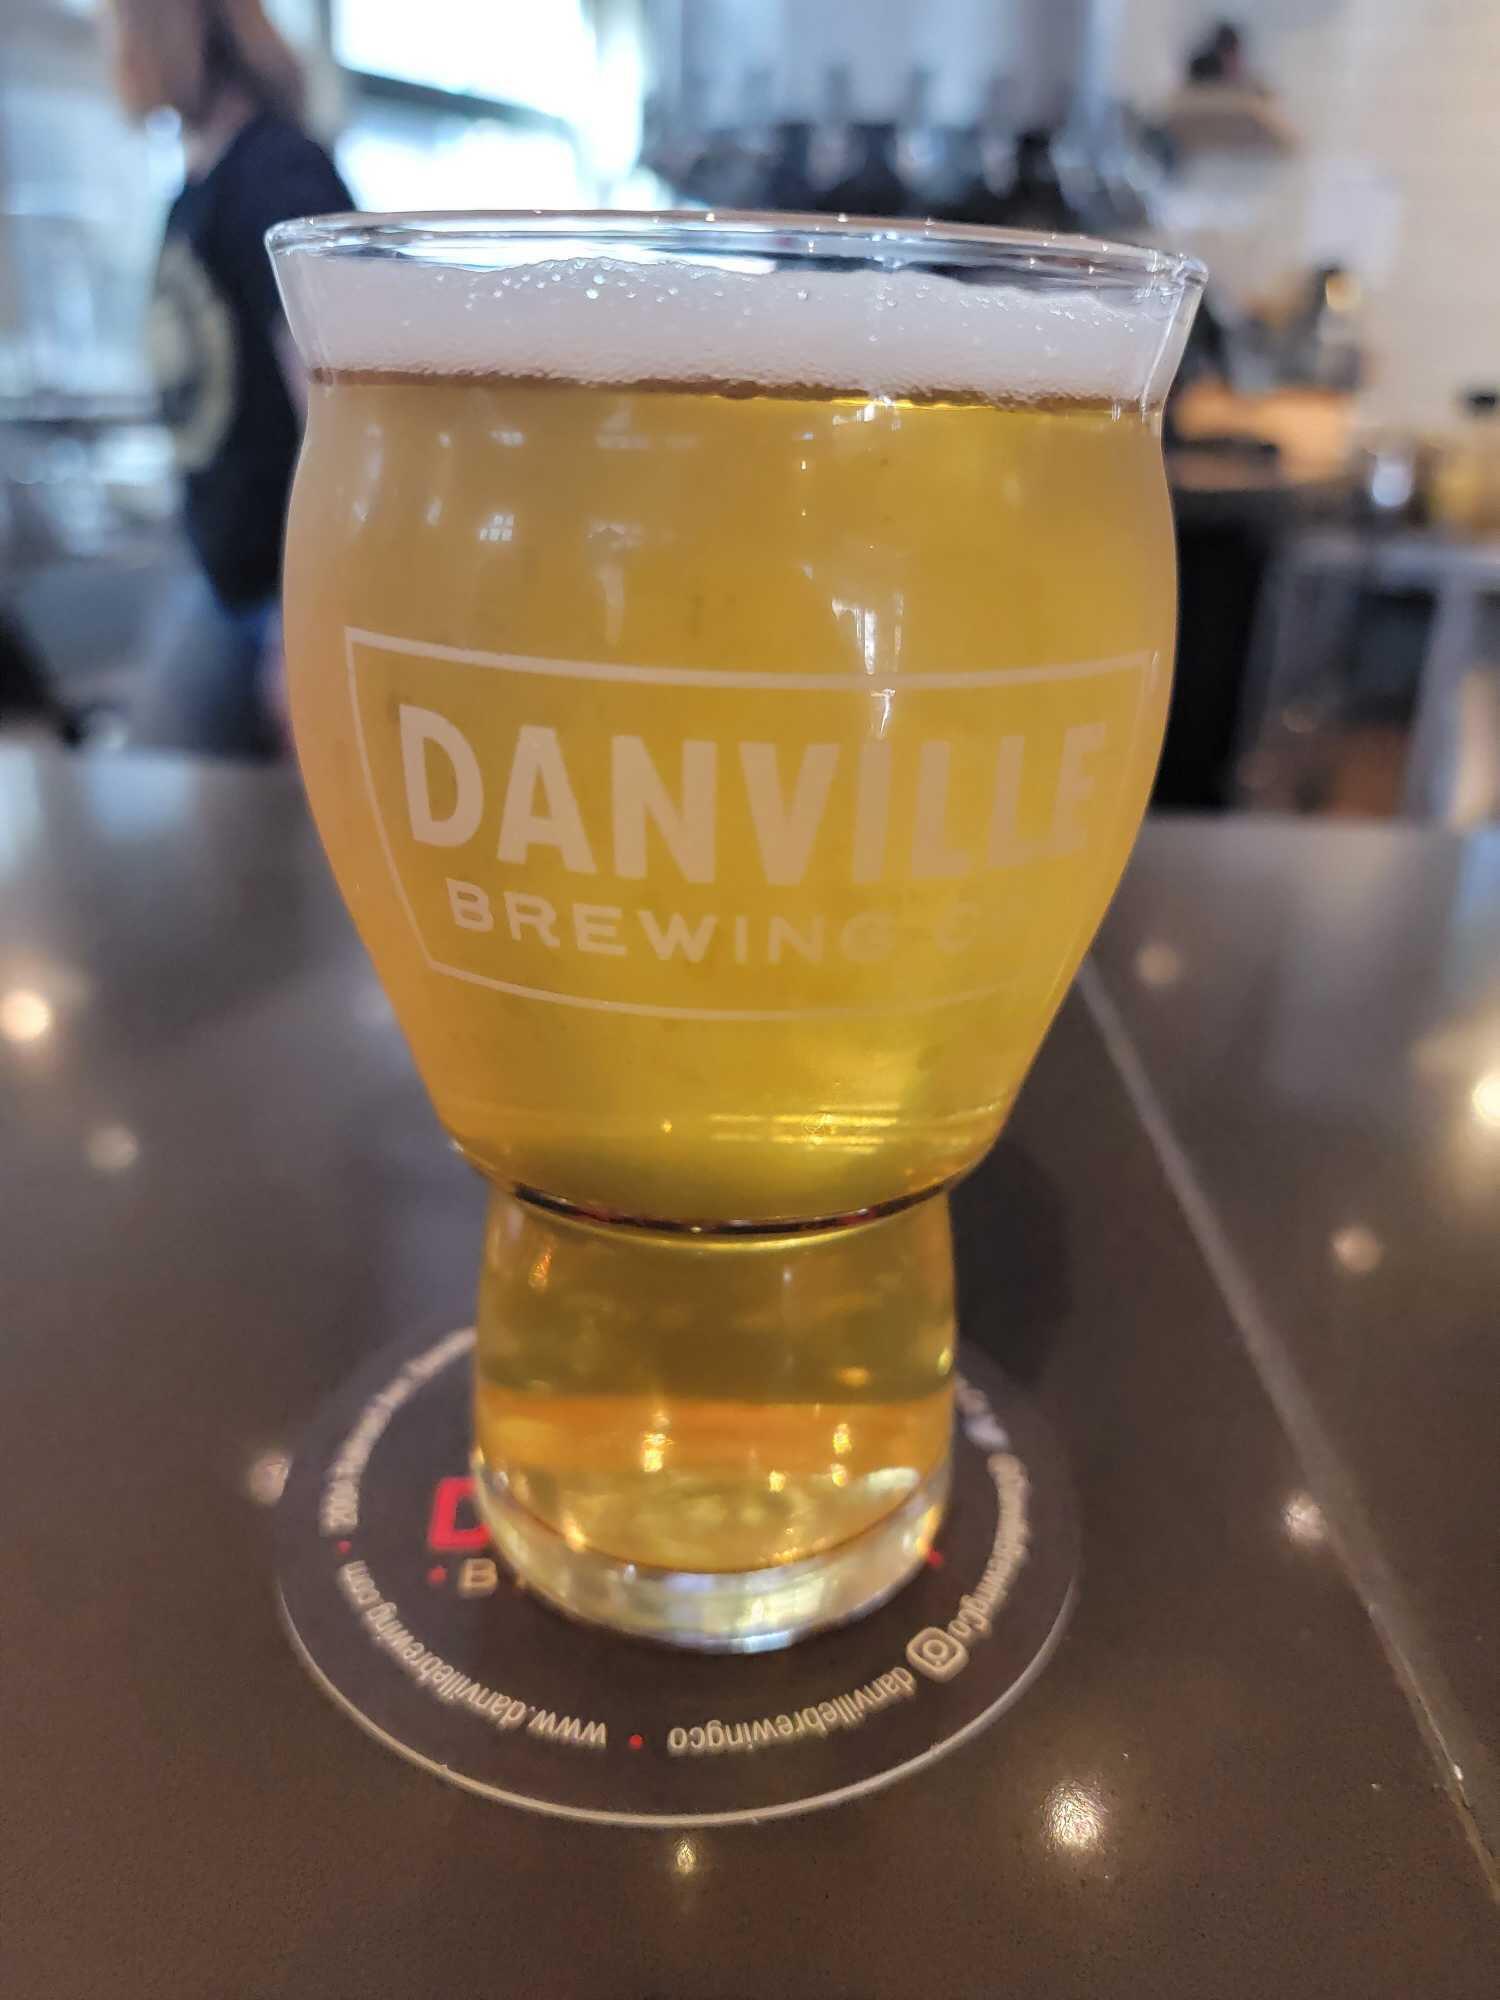 Danville Brewing Co.